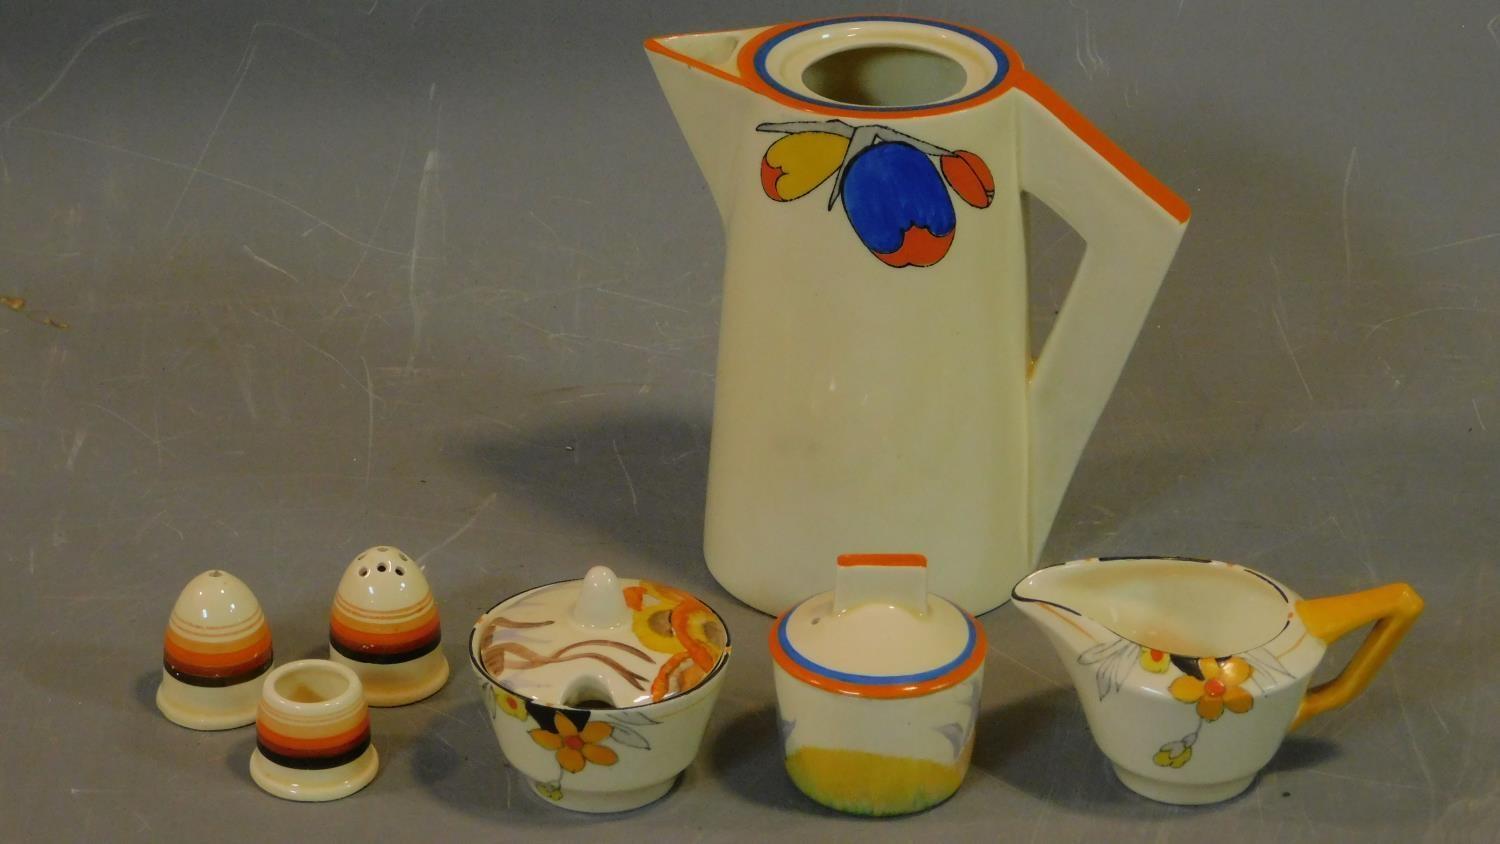 Hand painted ceramics by Clarice Cliff, Bizarre range and Crown Ducal Sunburst range.